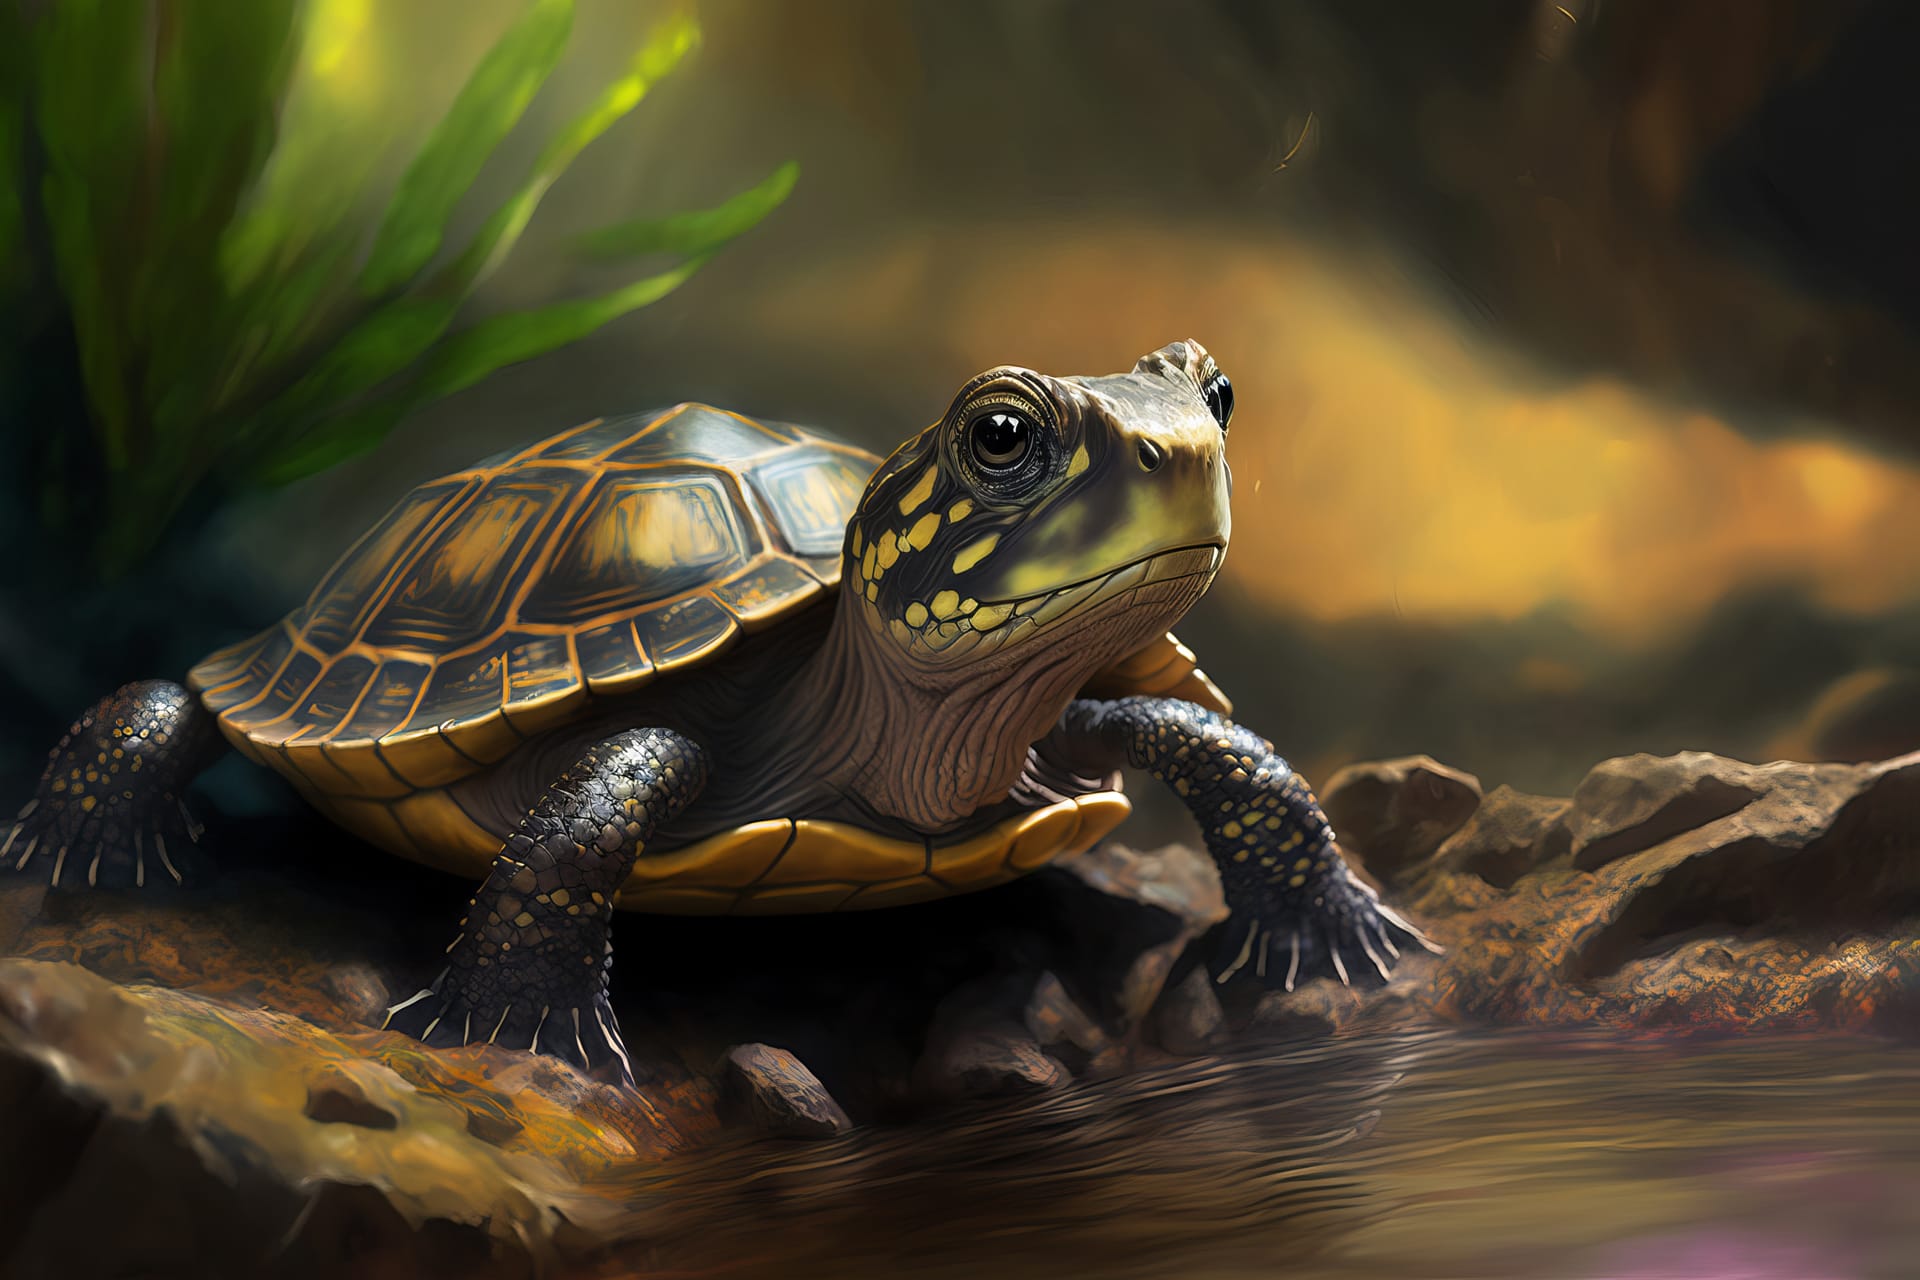 Illustration diamondback terrapin turtle crawling rocky shore rippling pond park